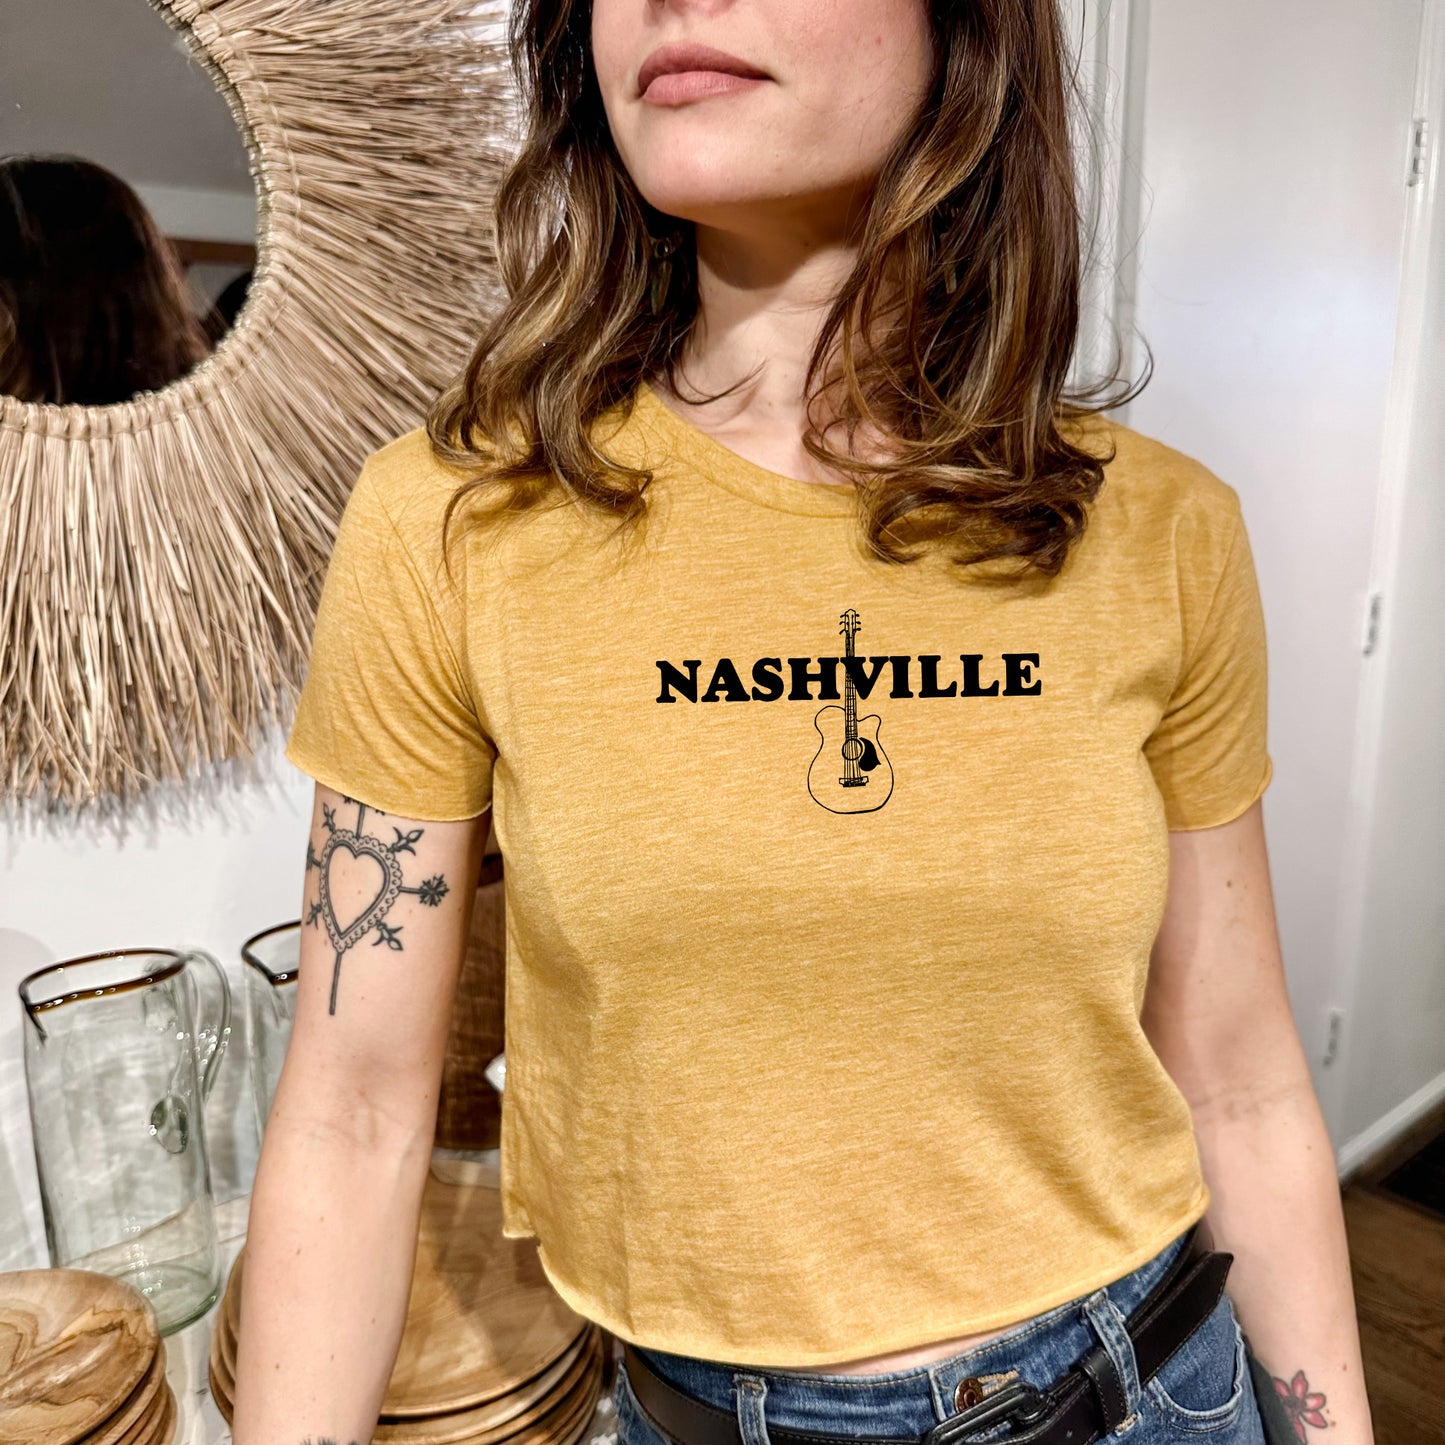 Nashville (TN) - Women's Crop Tee - Heather Gray or Gold